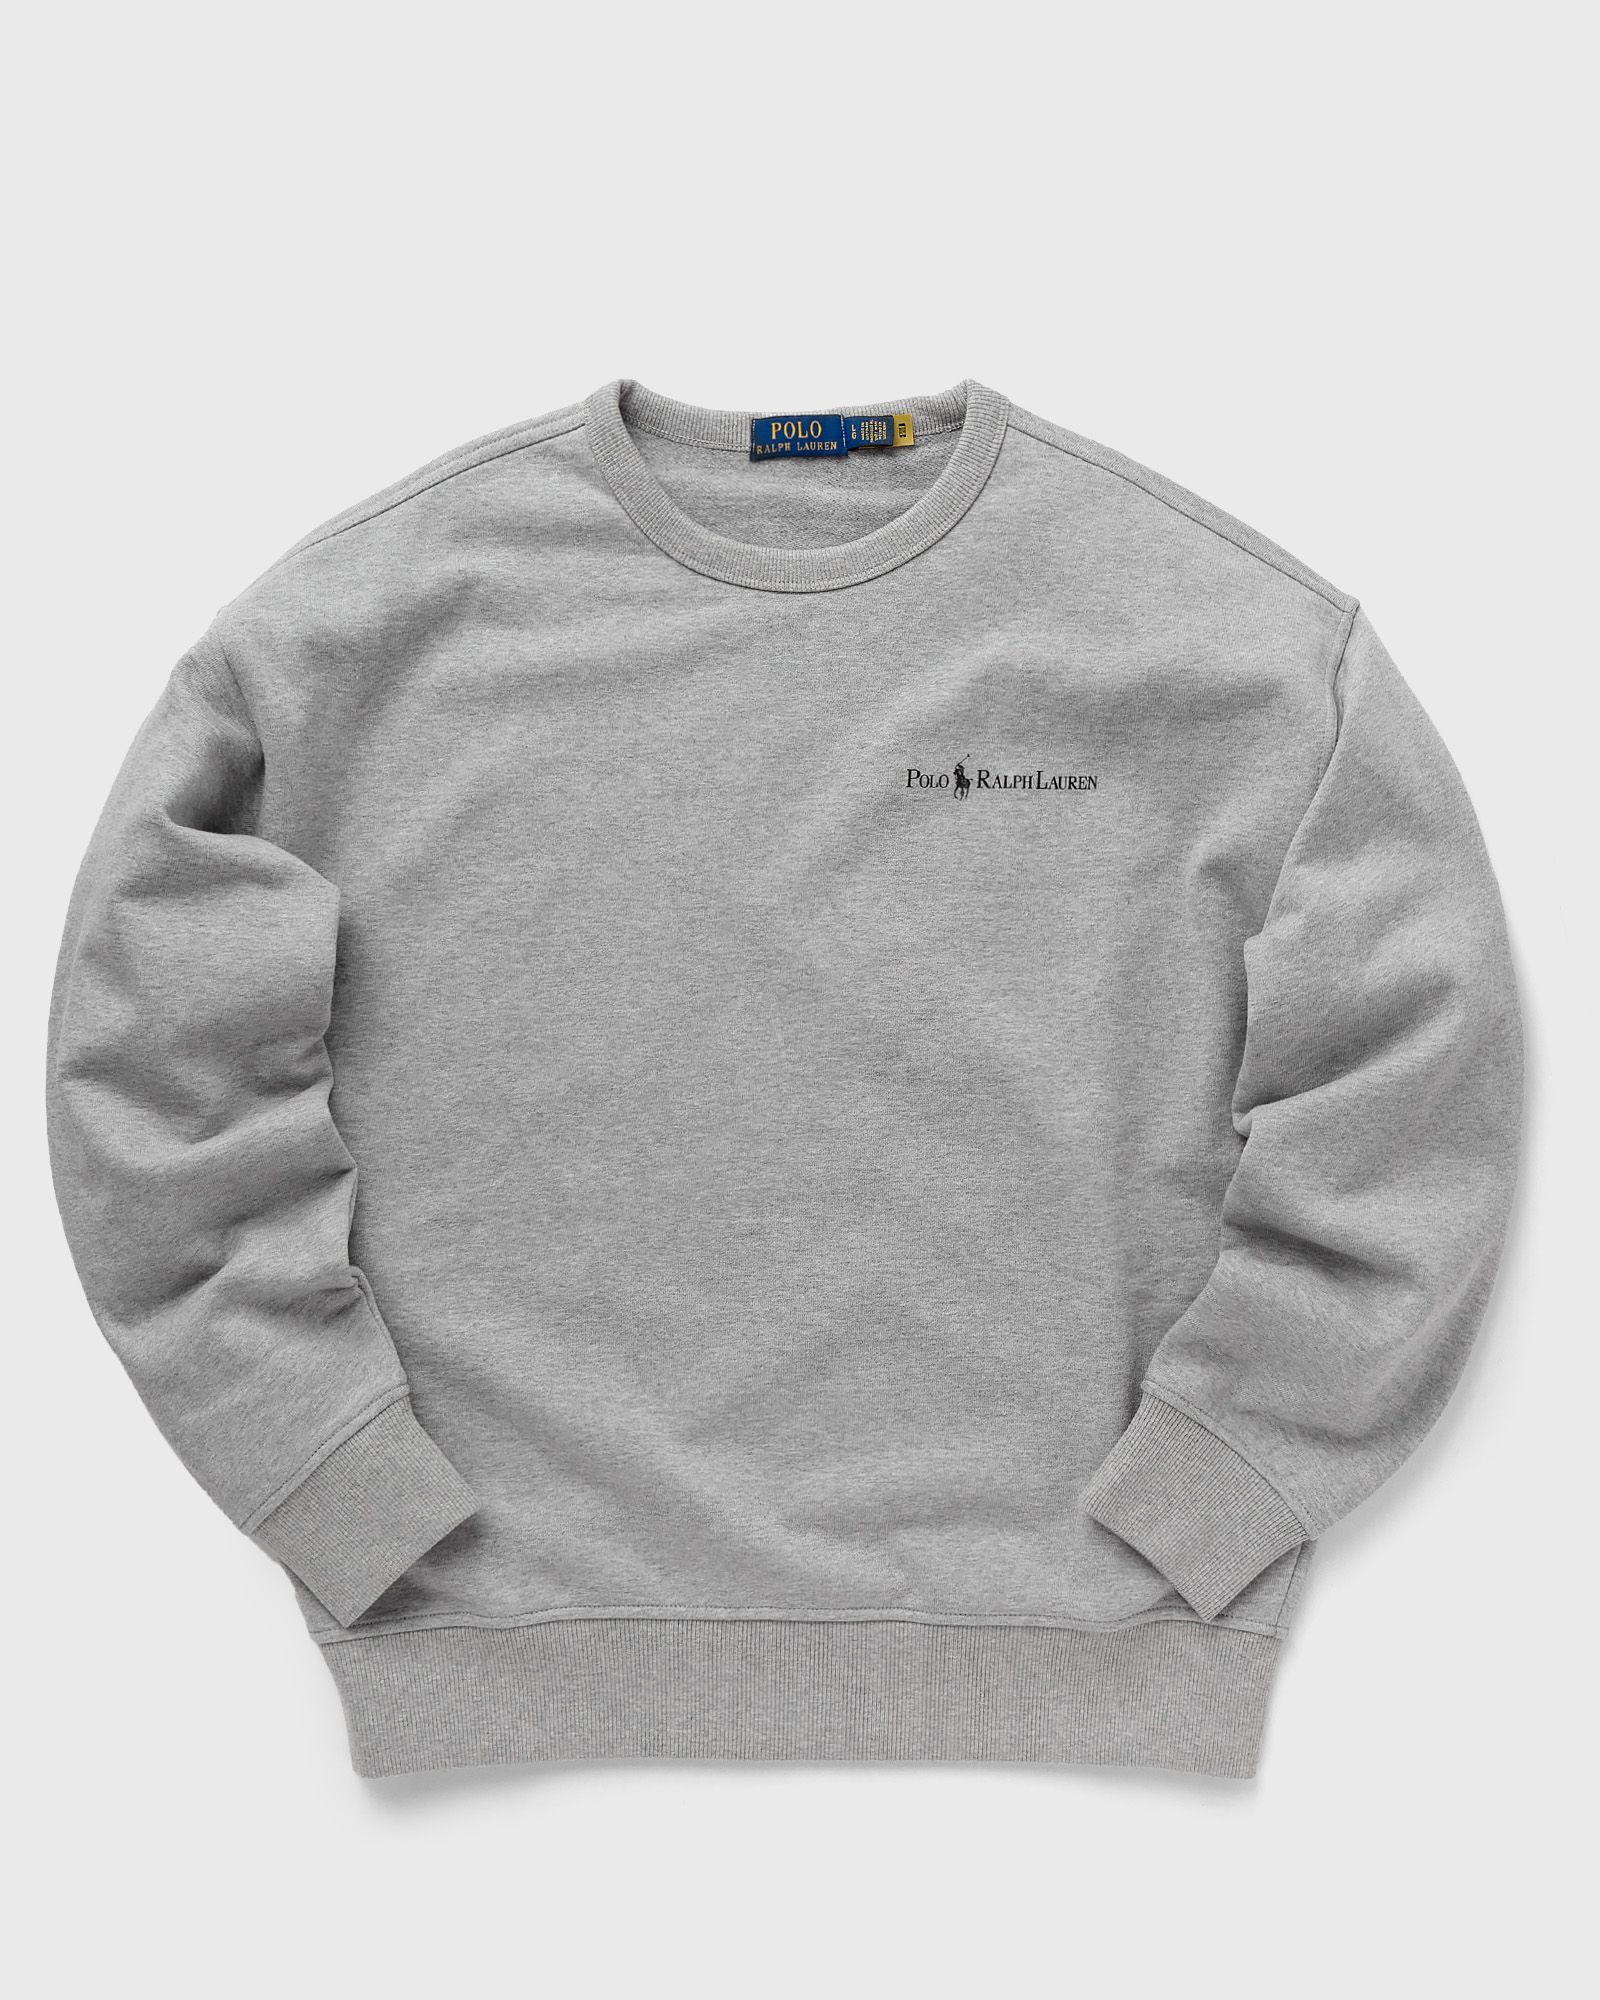 Polo Ralph Lauren - long sleeve-sweatshirt men sweatshirts grey in größe:xxl